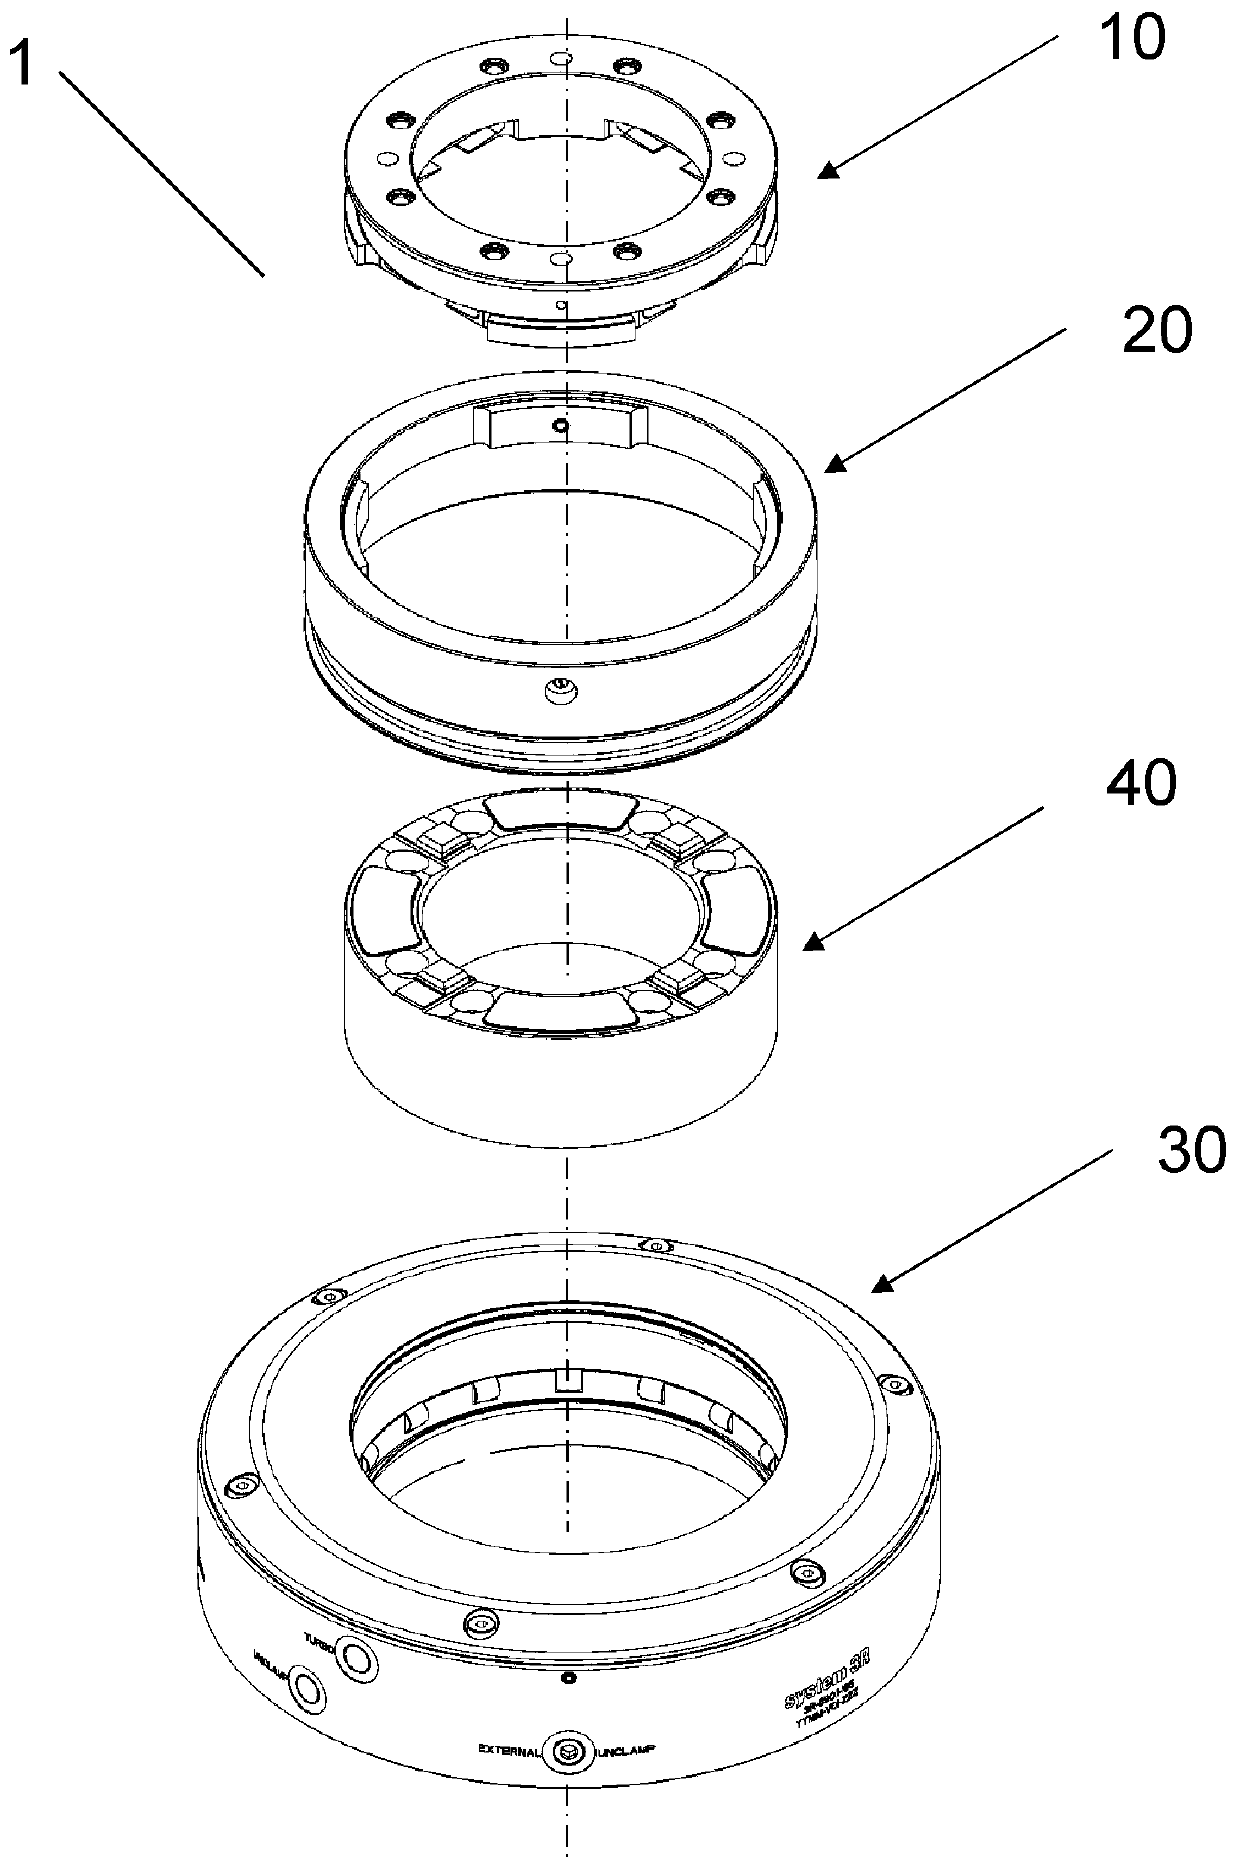 Modular clamping system